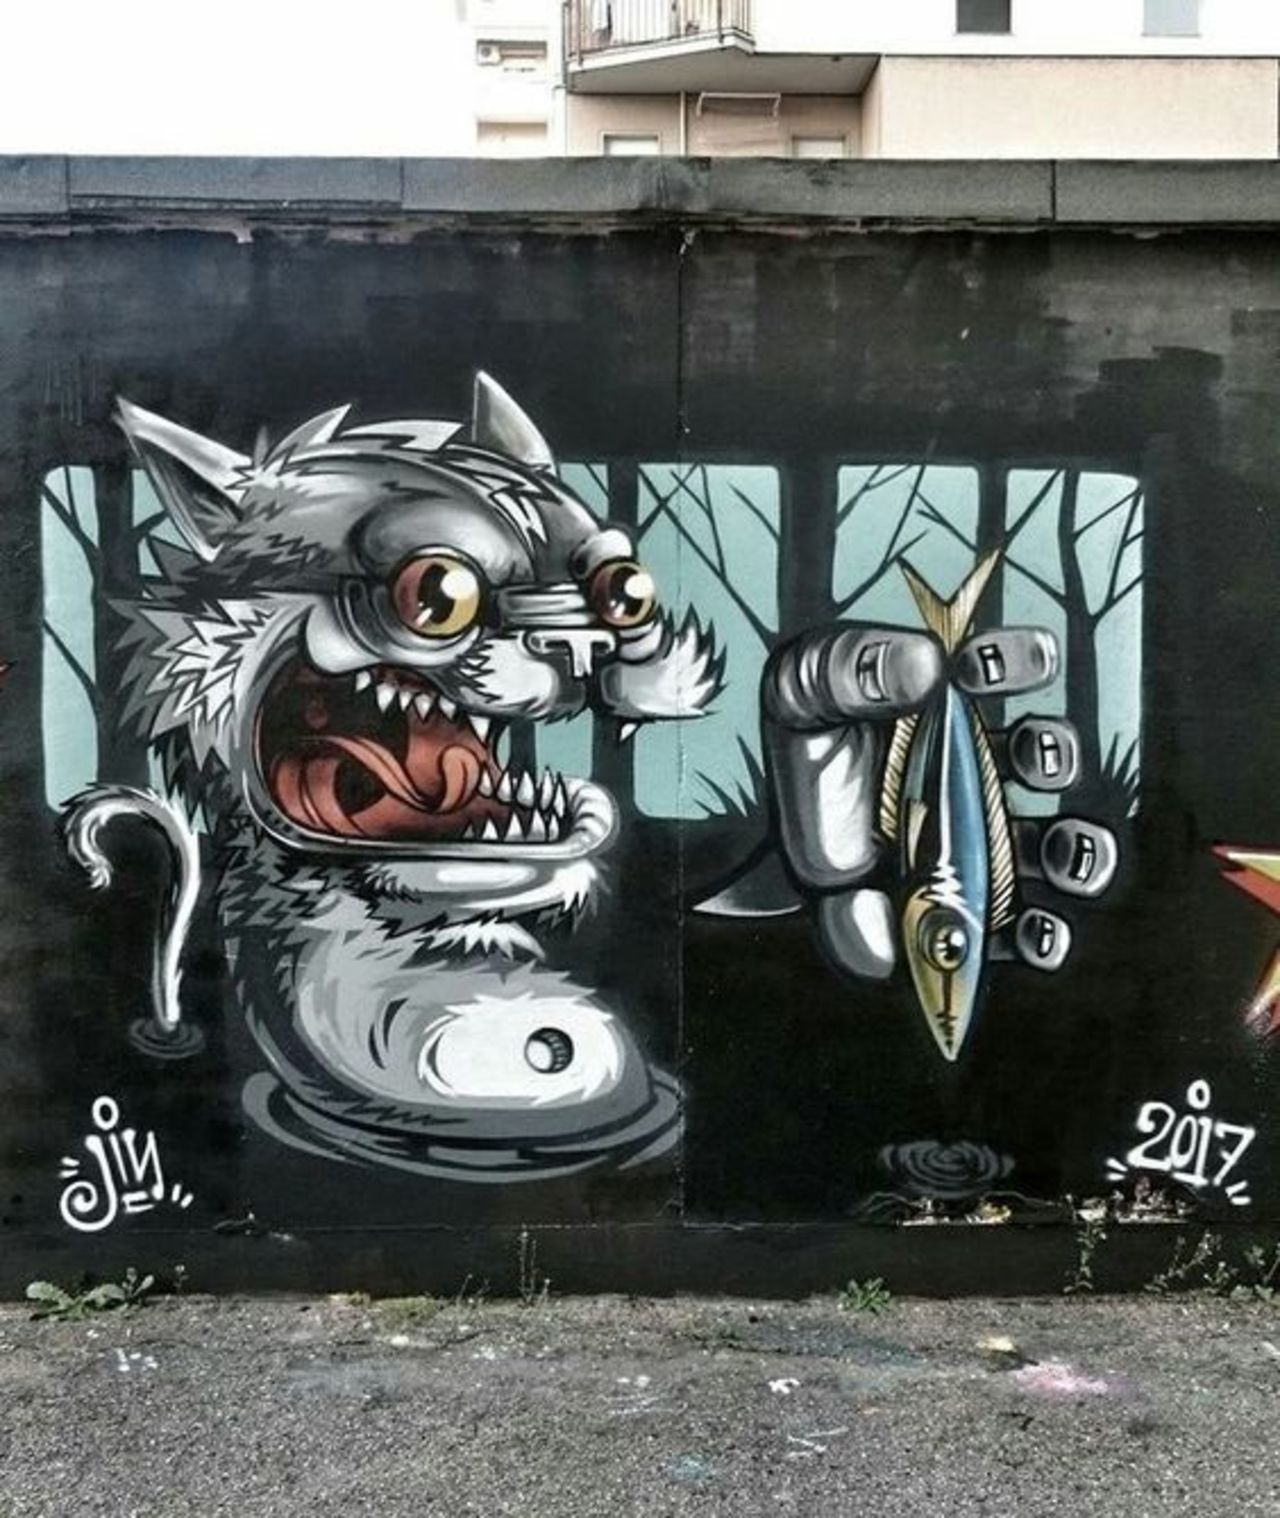 ... mad cat. Art by Mario Jin in Corsica #StreetArt #Art #Crazy #Cat #Graffiti #Mural #UrbanArt #Corsica https://t.co/rfyBfSr3DH